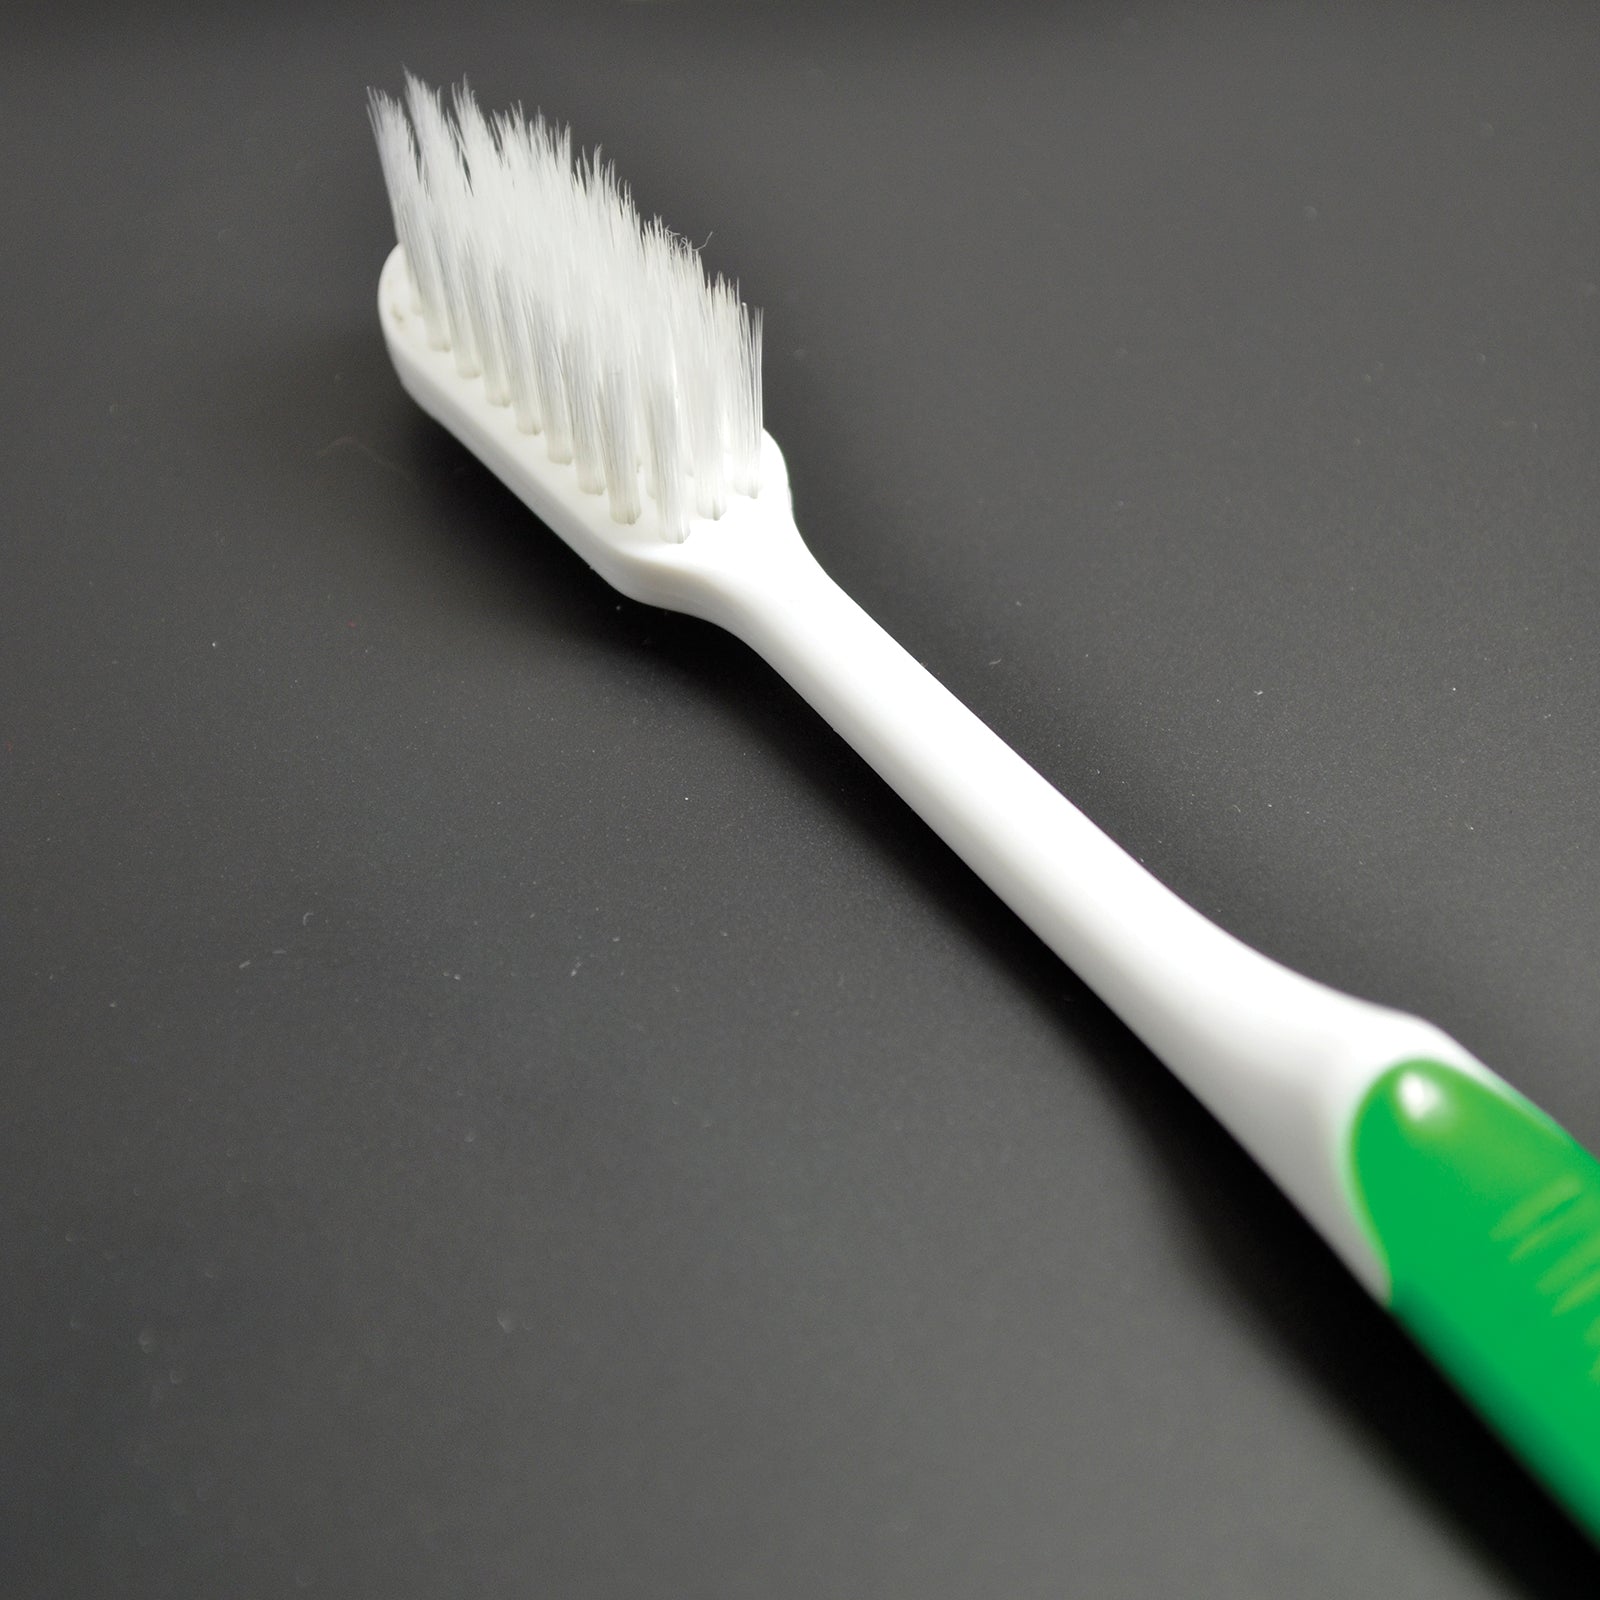 BrushCare Sensitive Extra Soft Toothbrush Triple Pack